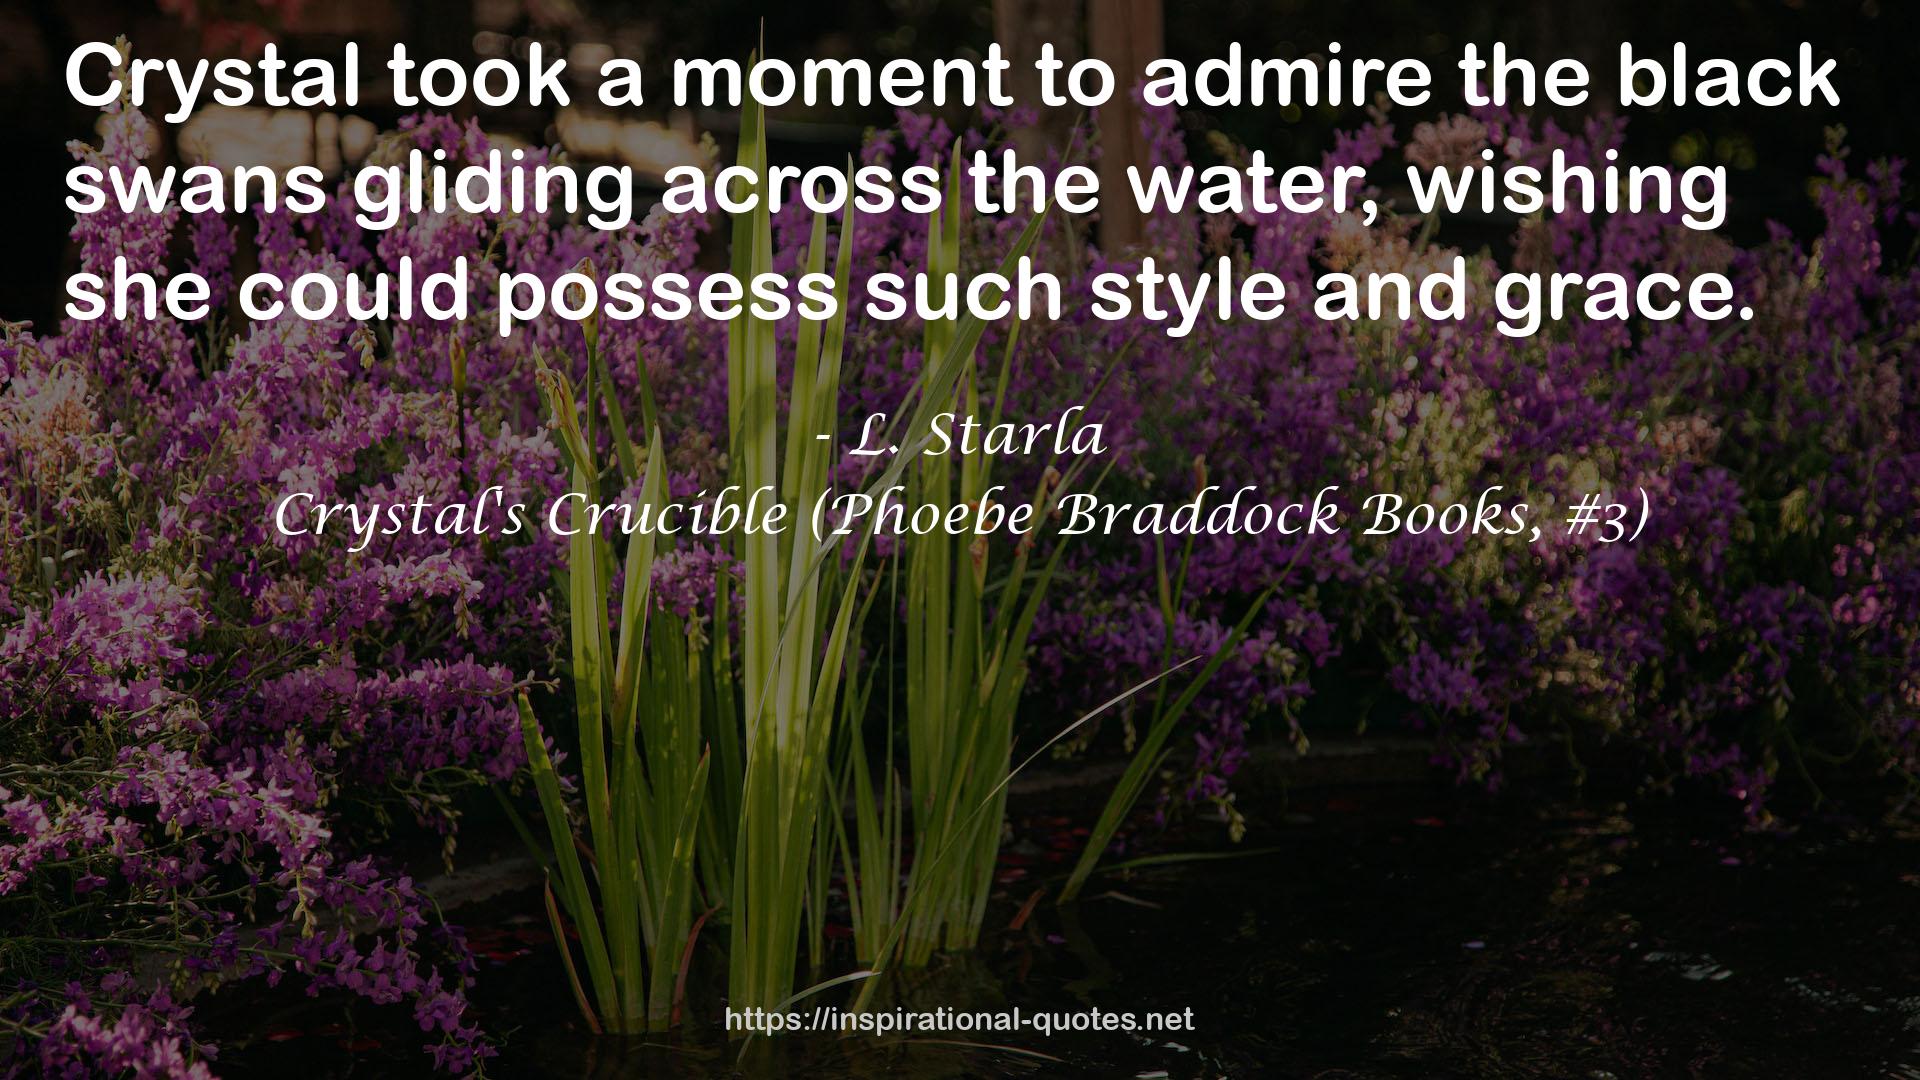 Crystal's Crucible (Phoebe Braddock Books, #3) QUOTES